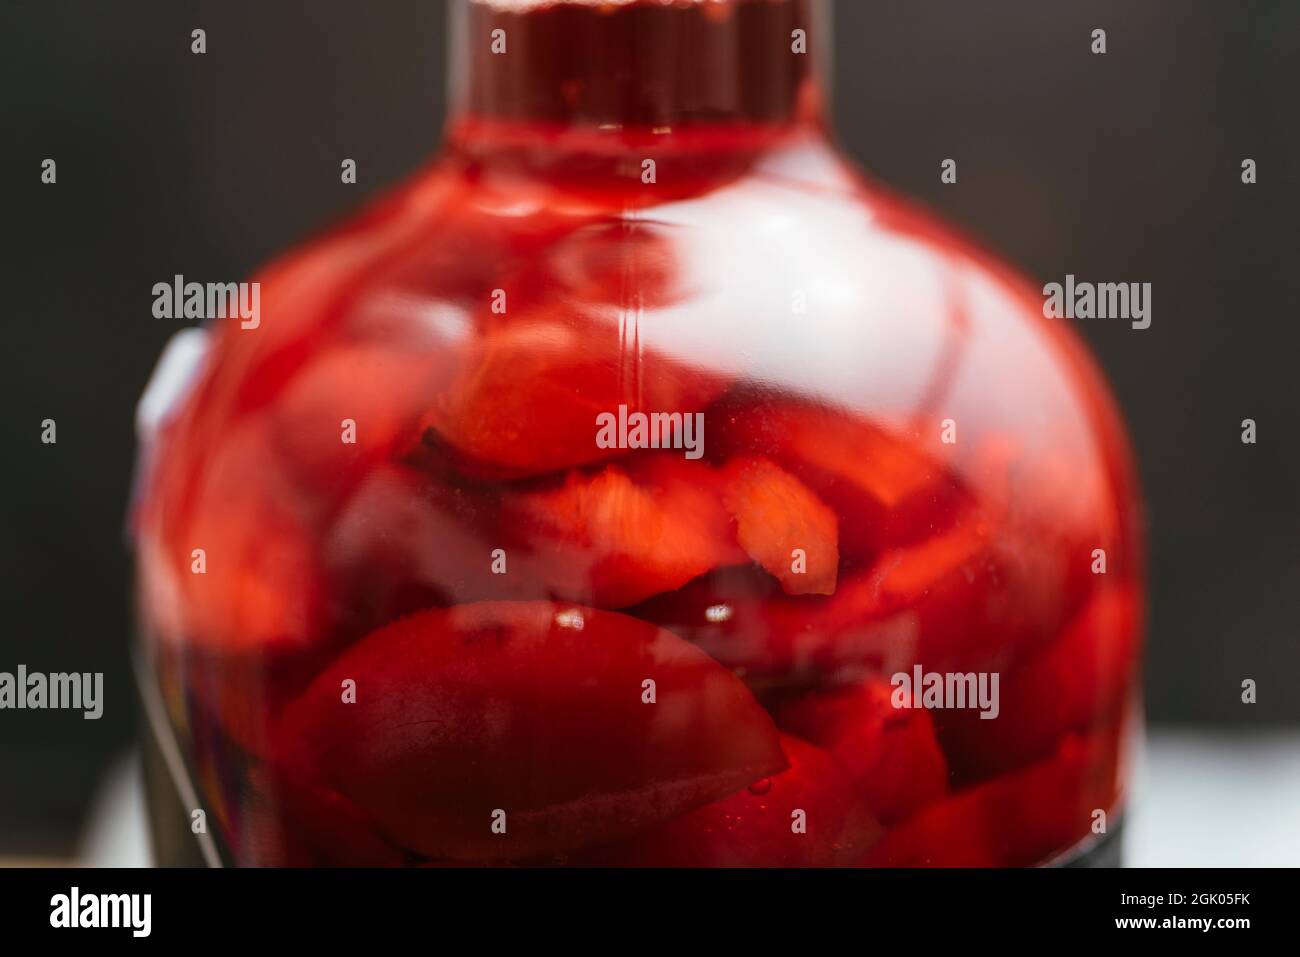 Making infused plum vinegar. Stock Photo